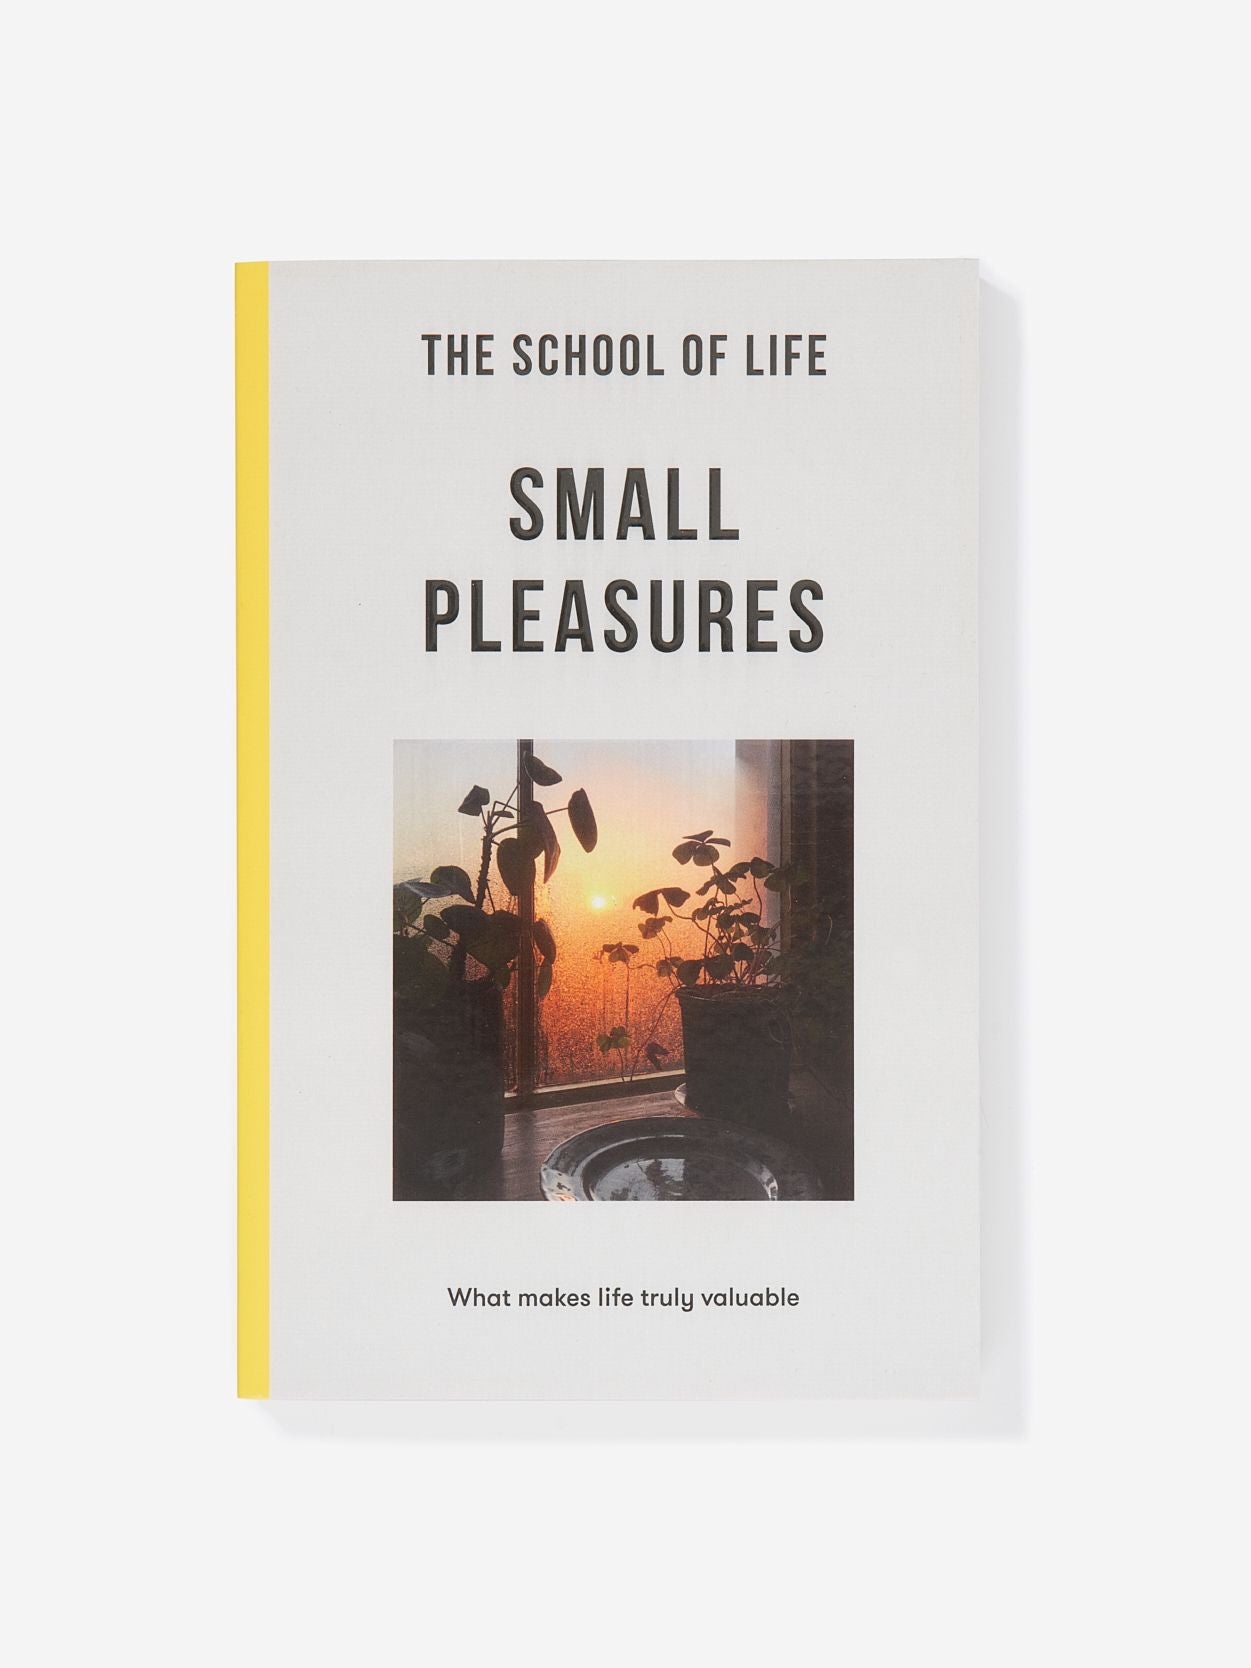 The School of Life Small Pleasures